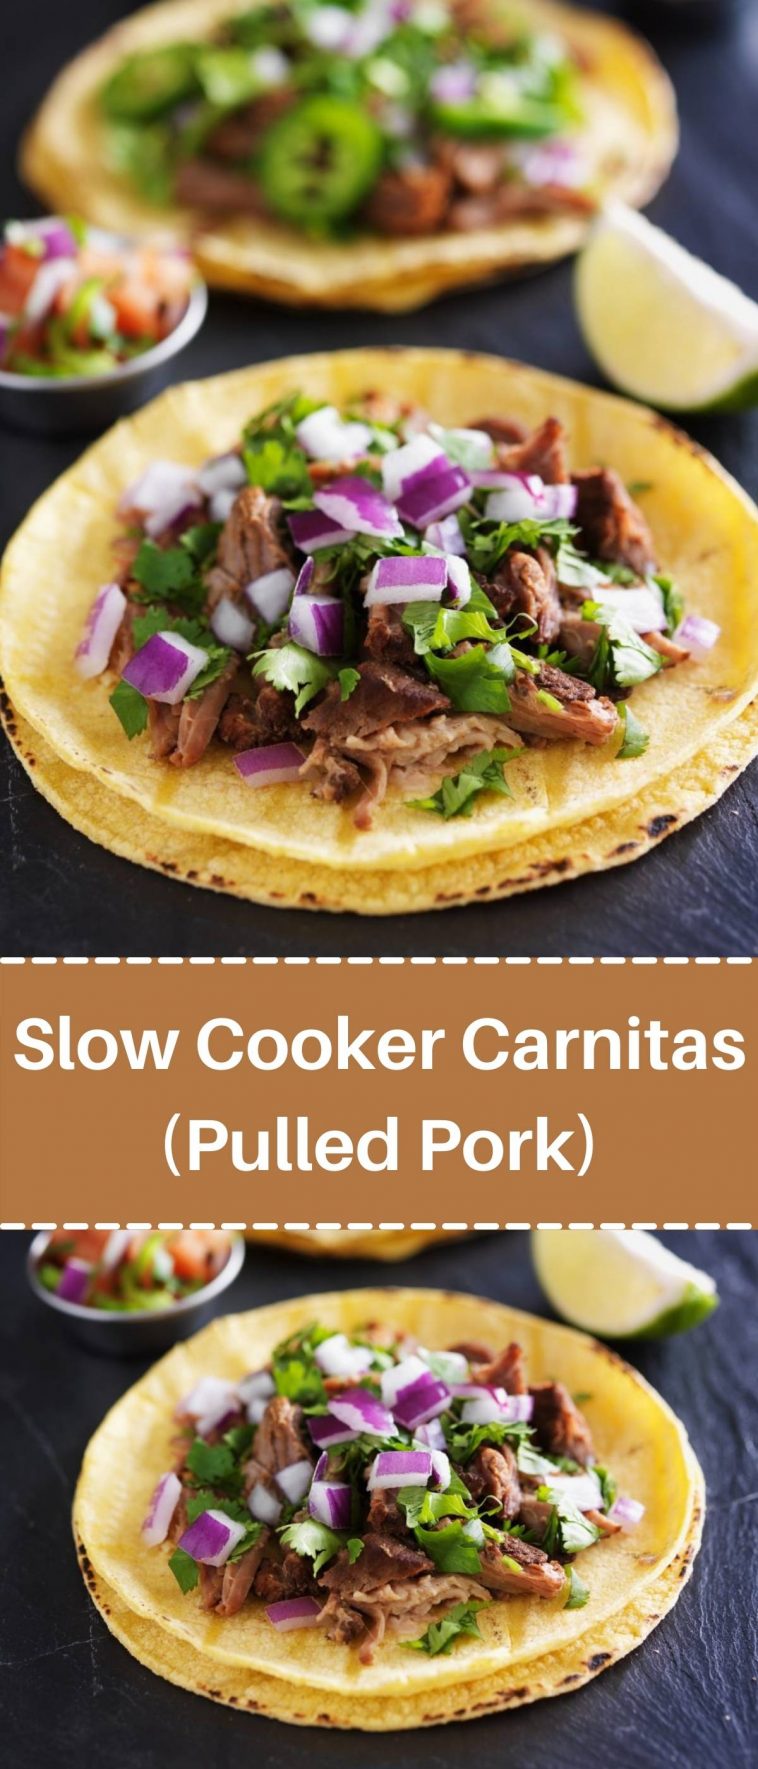 Slow Cooker Carnitas (Pulled Pork)